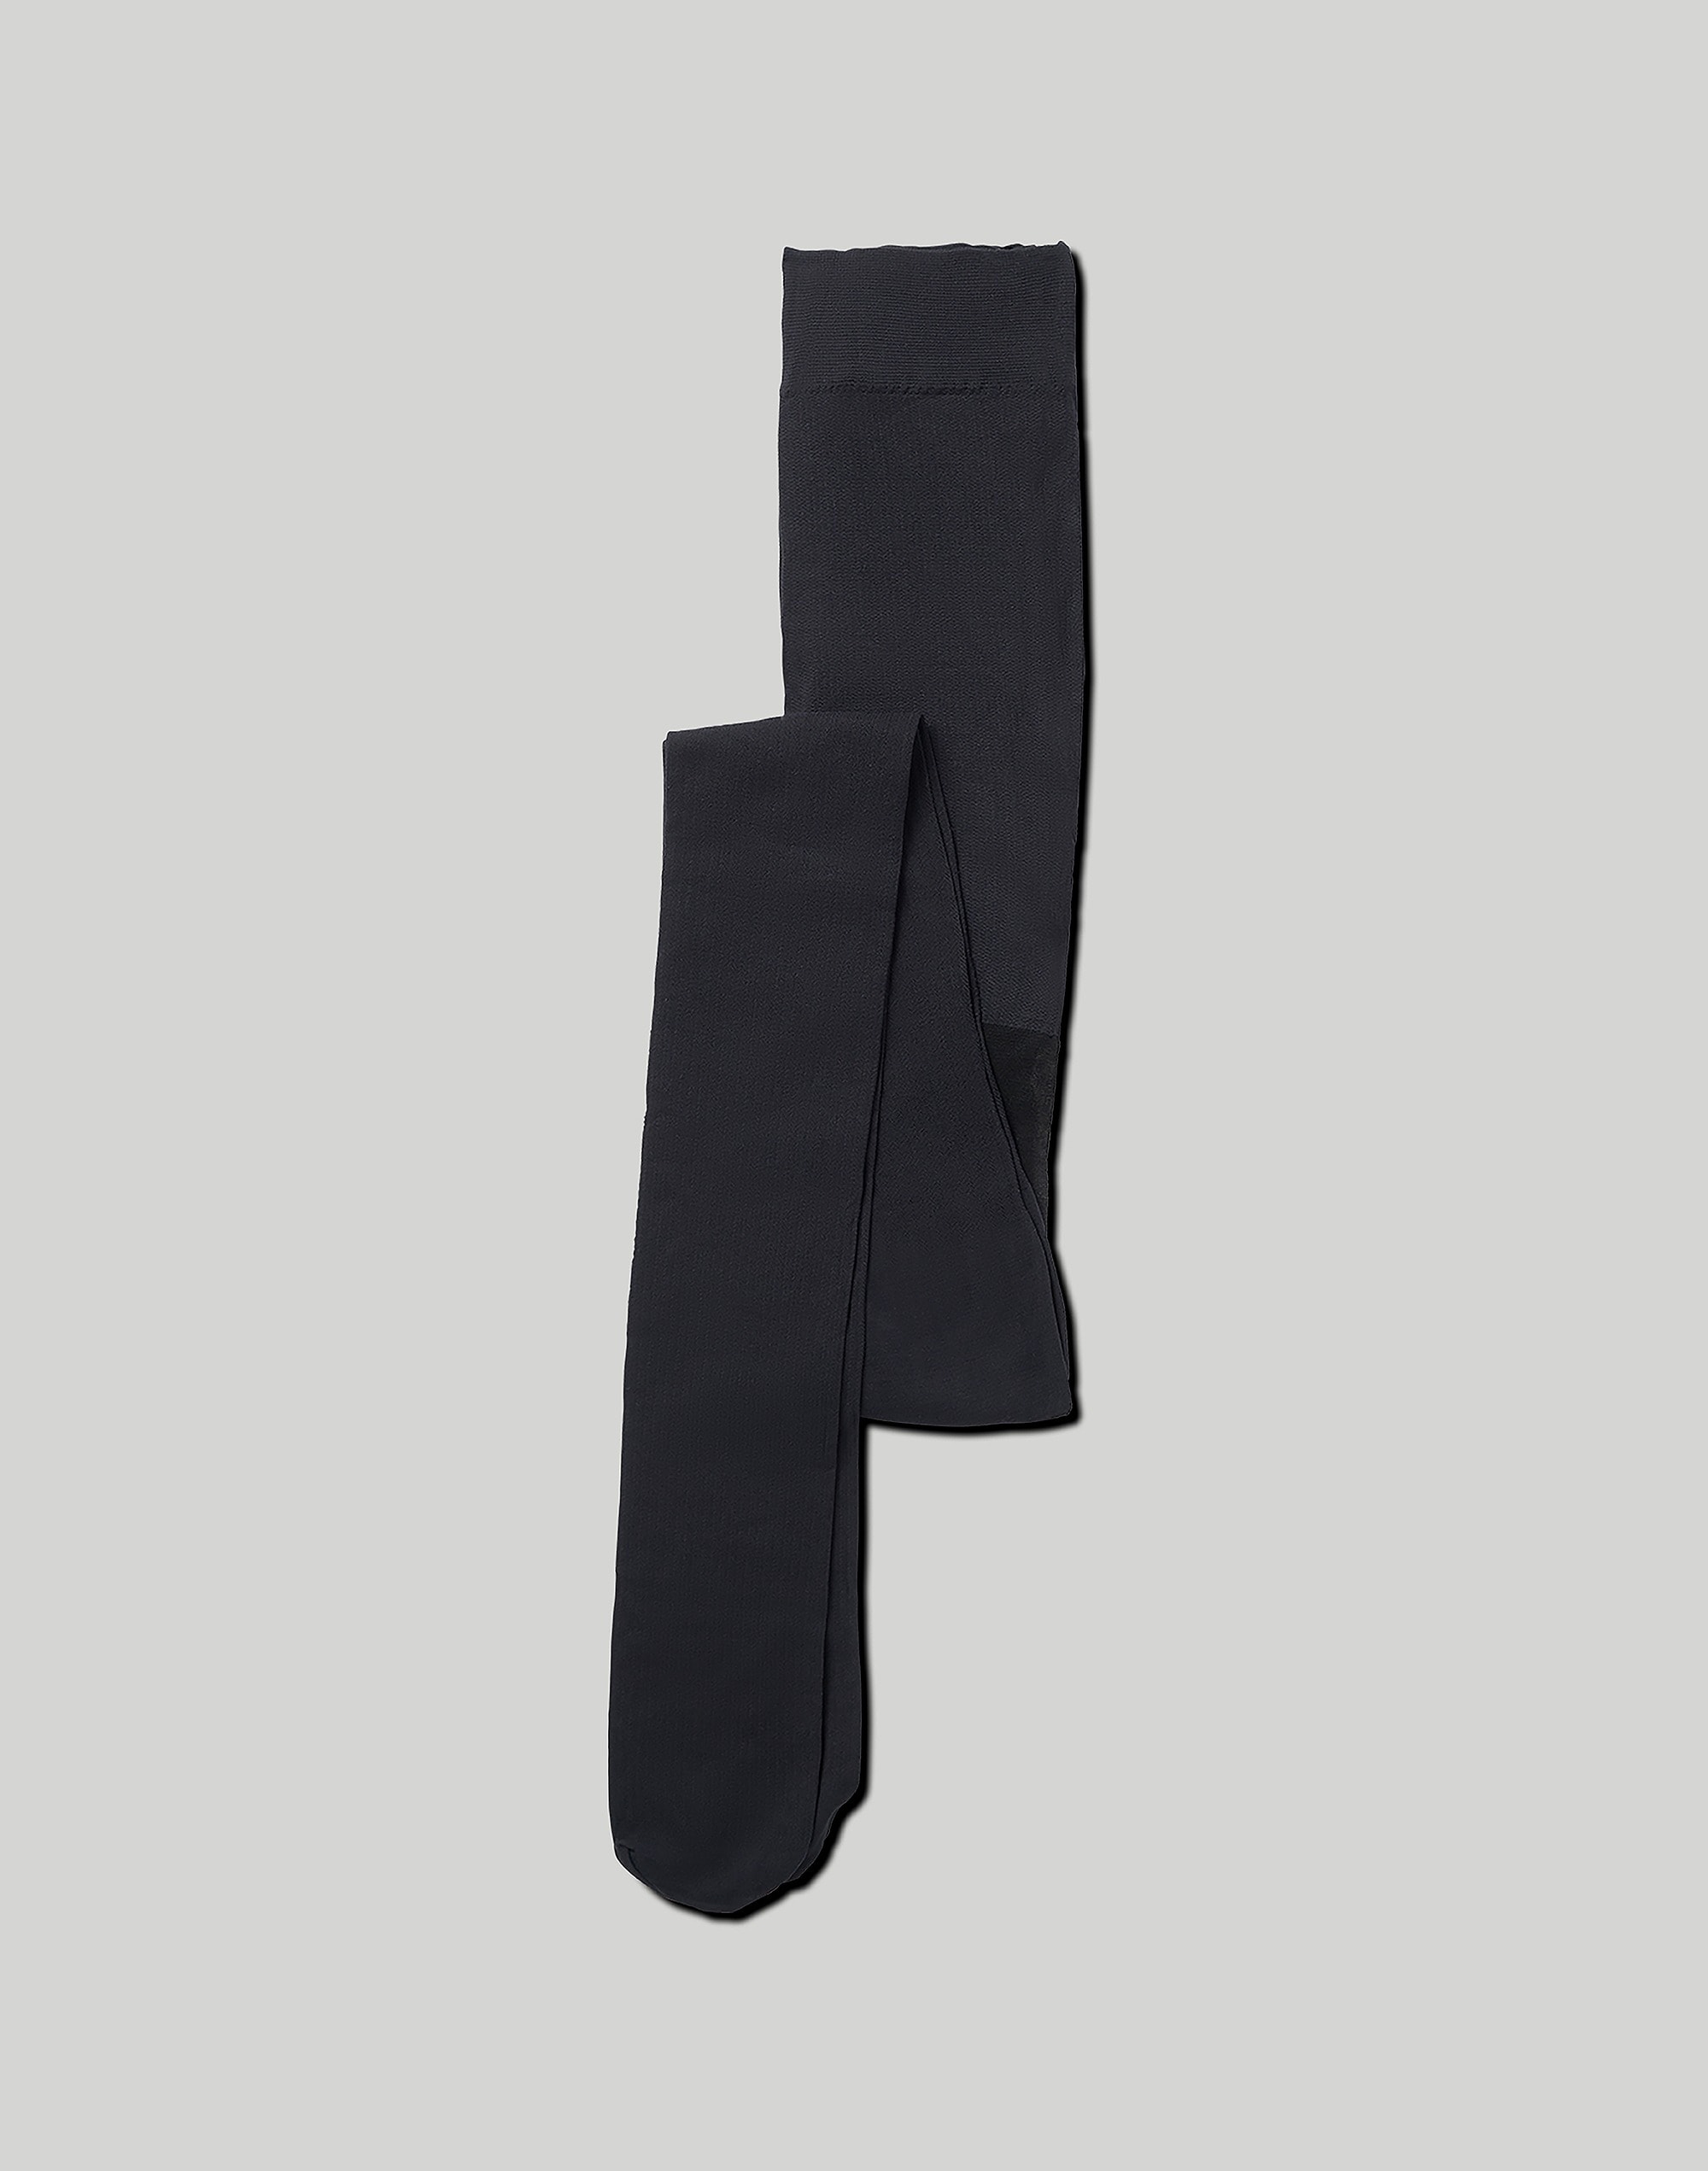 Dagmar Over-Knee Tights Black 20/80 den | Shop now - Swedish Stockings